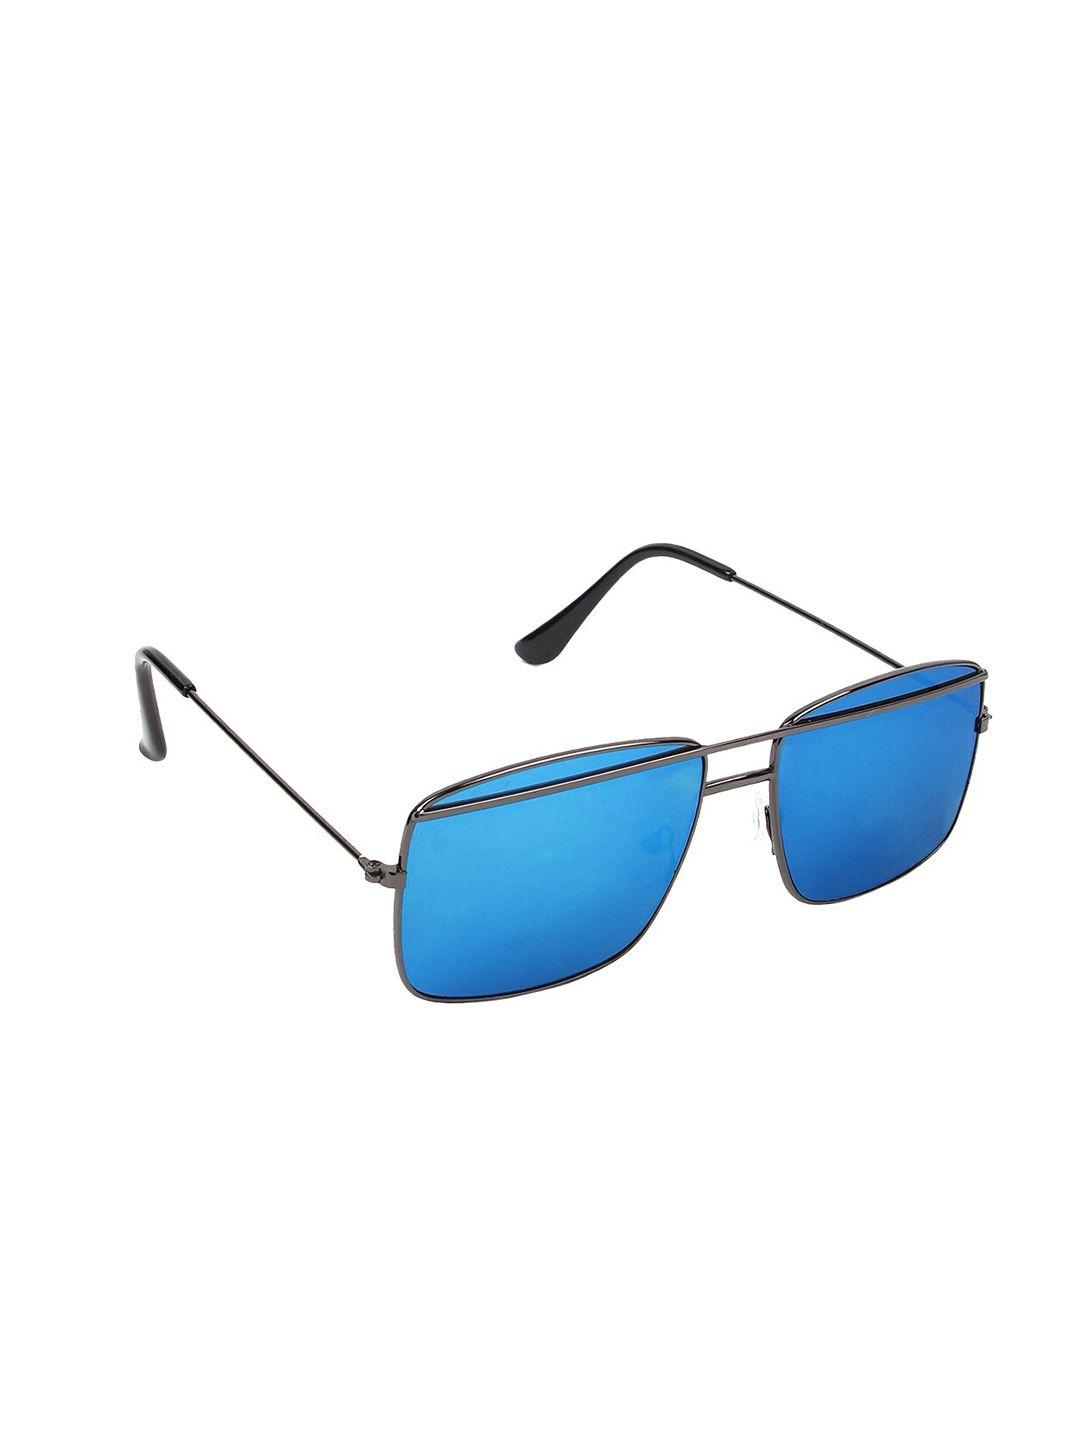 swiss design unisex blue lens & black square sunglasses with uv protected lens